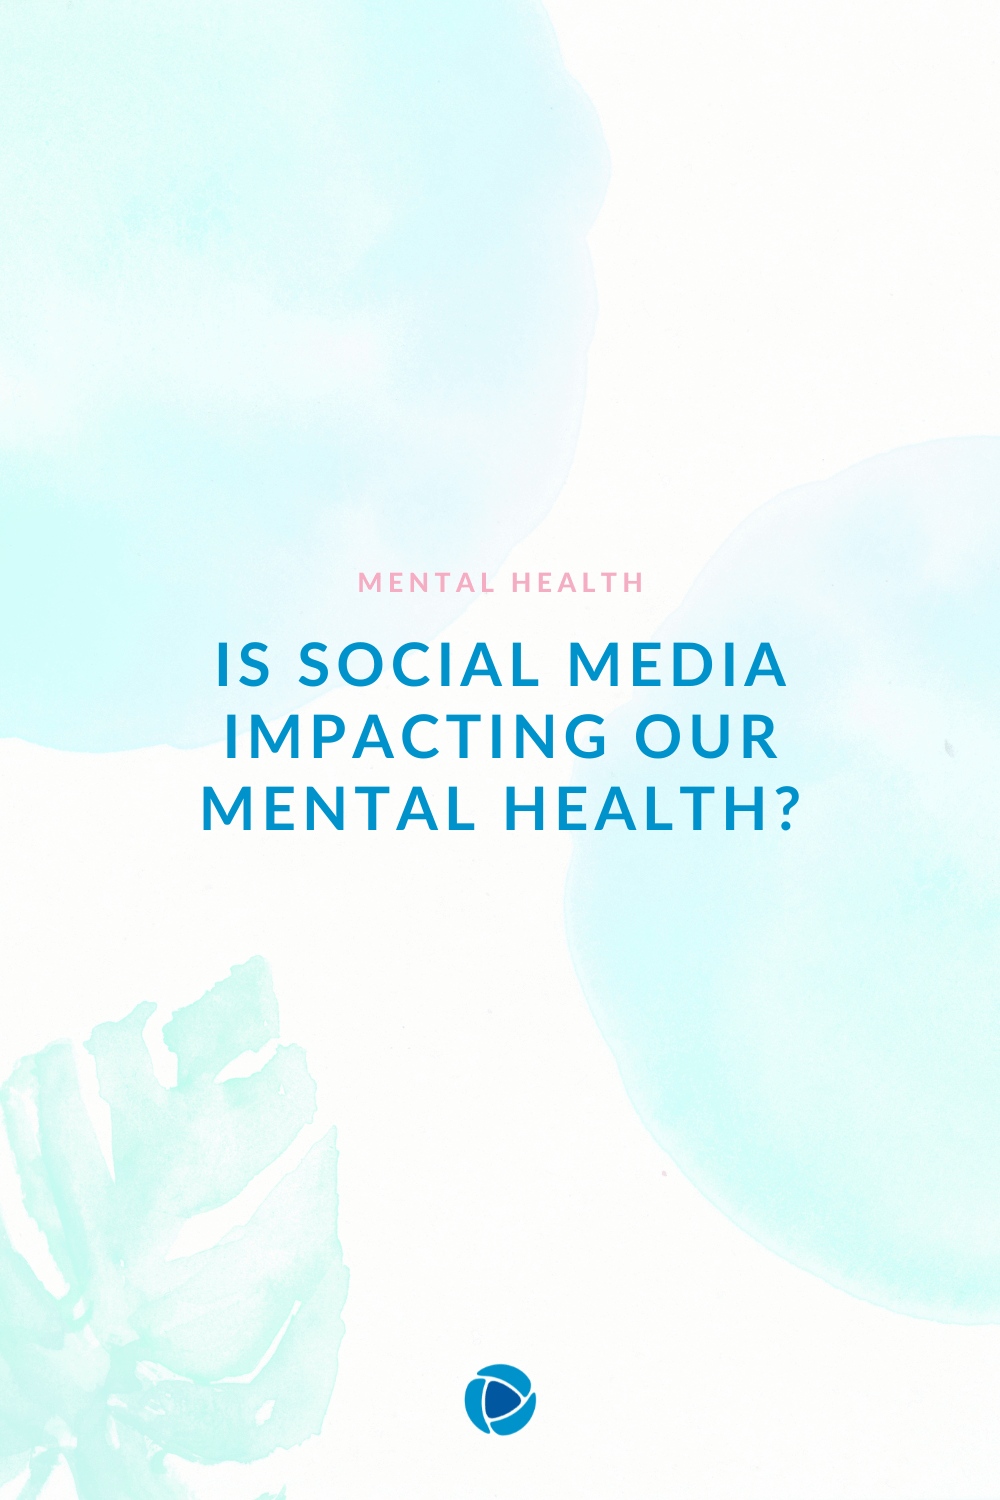 Is social media impacting our mental health?